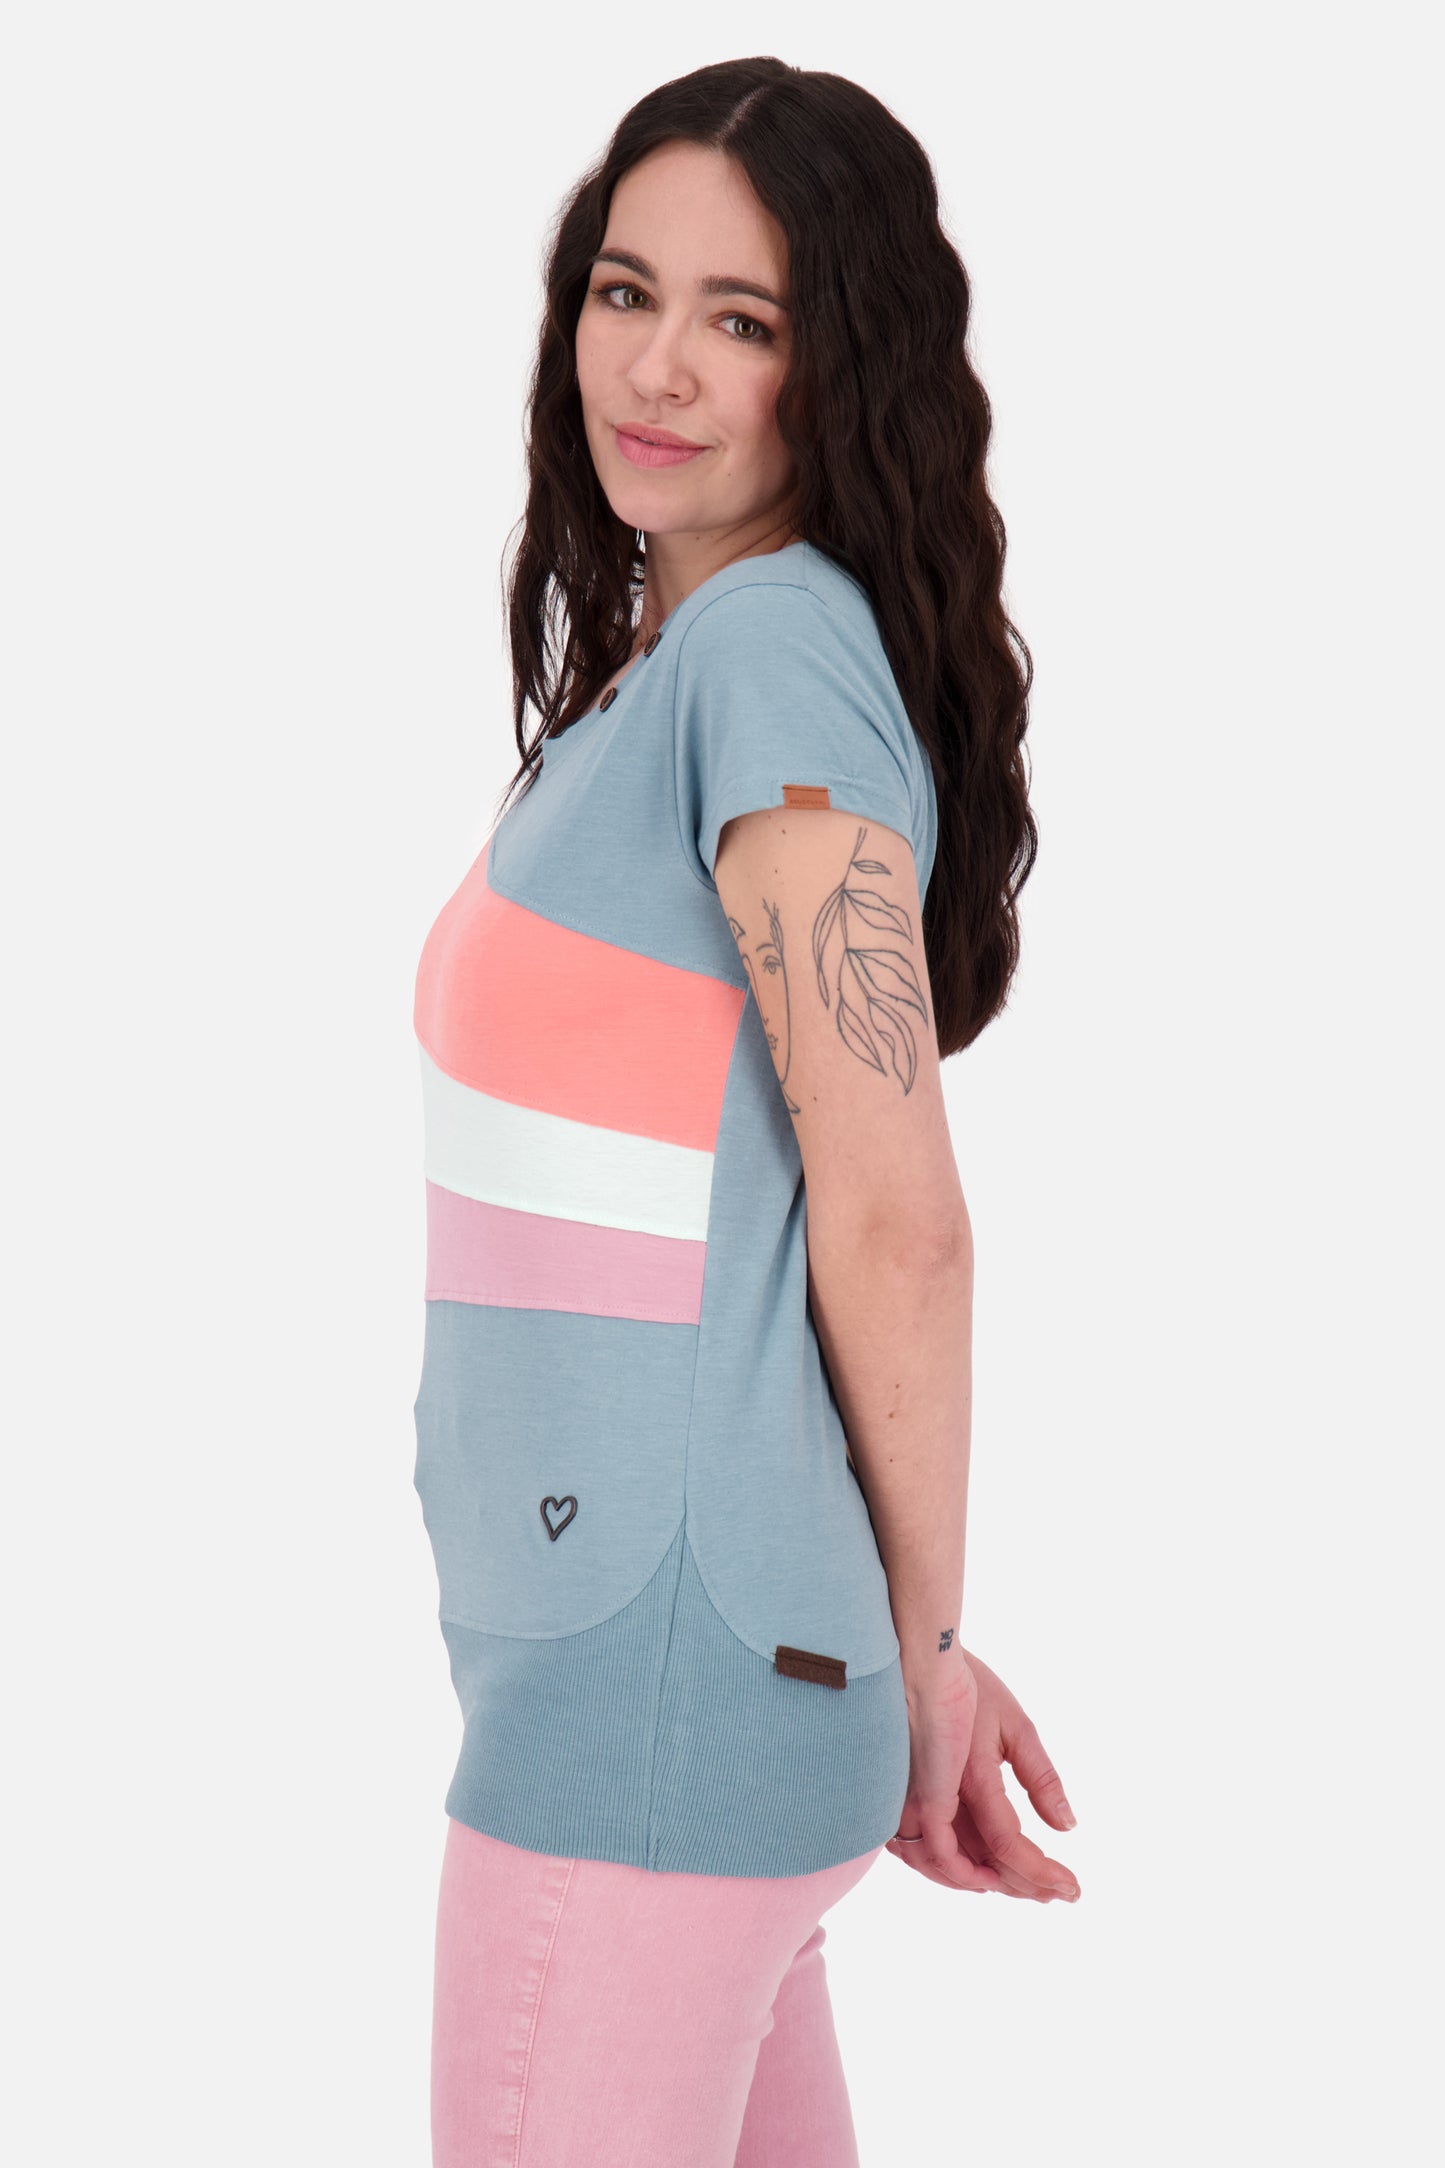 ClementinaAK A T-Shirt Damen - Trendpiece für den Sommer Grau